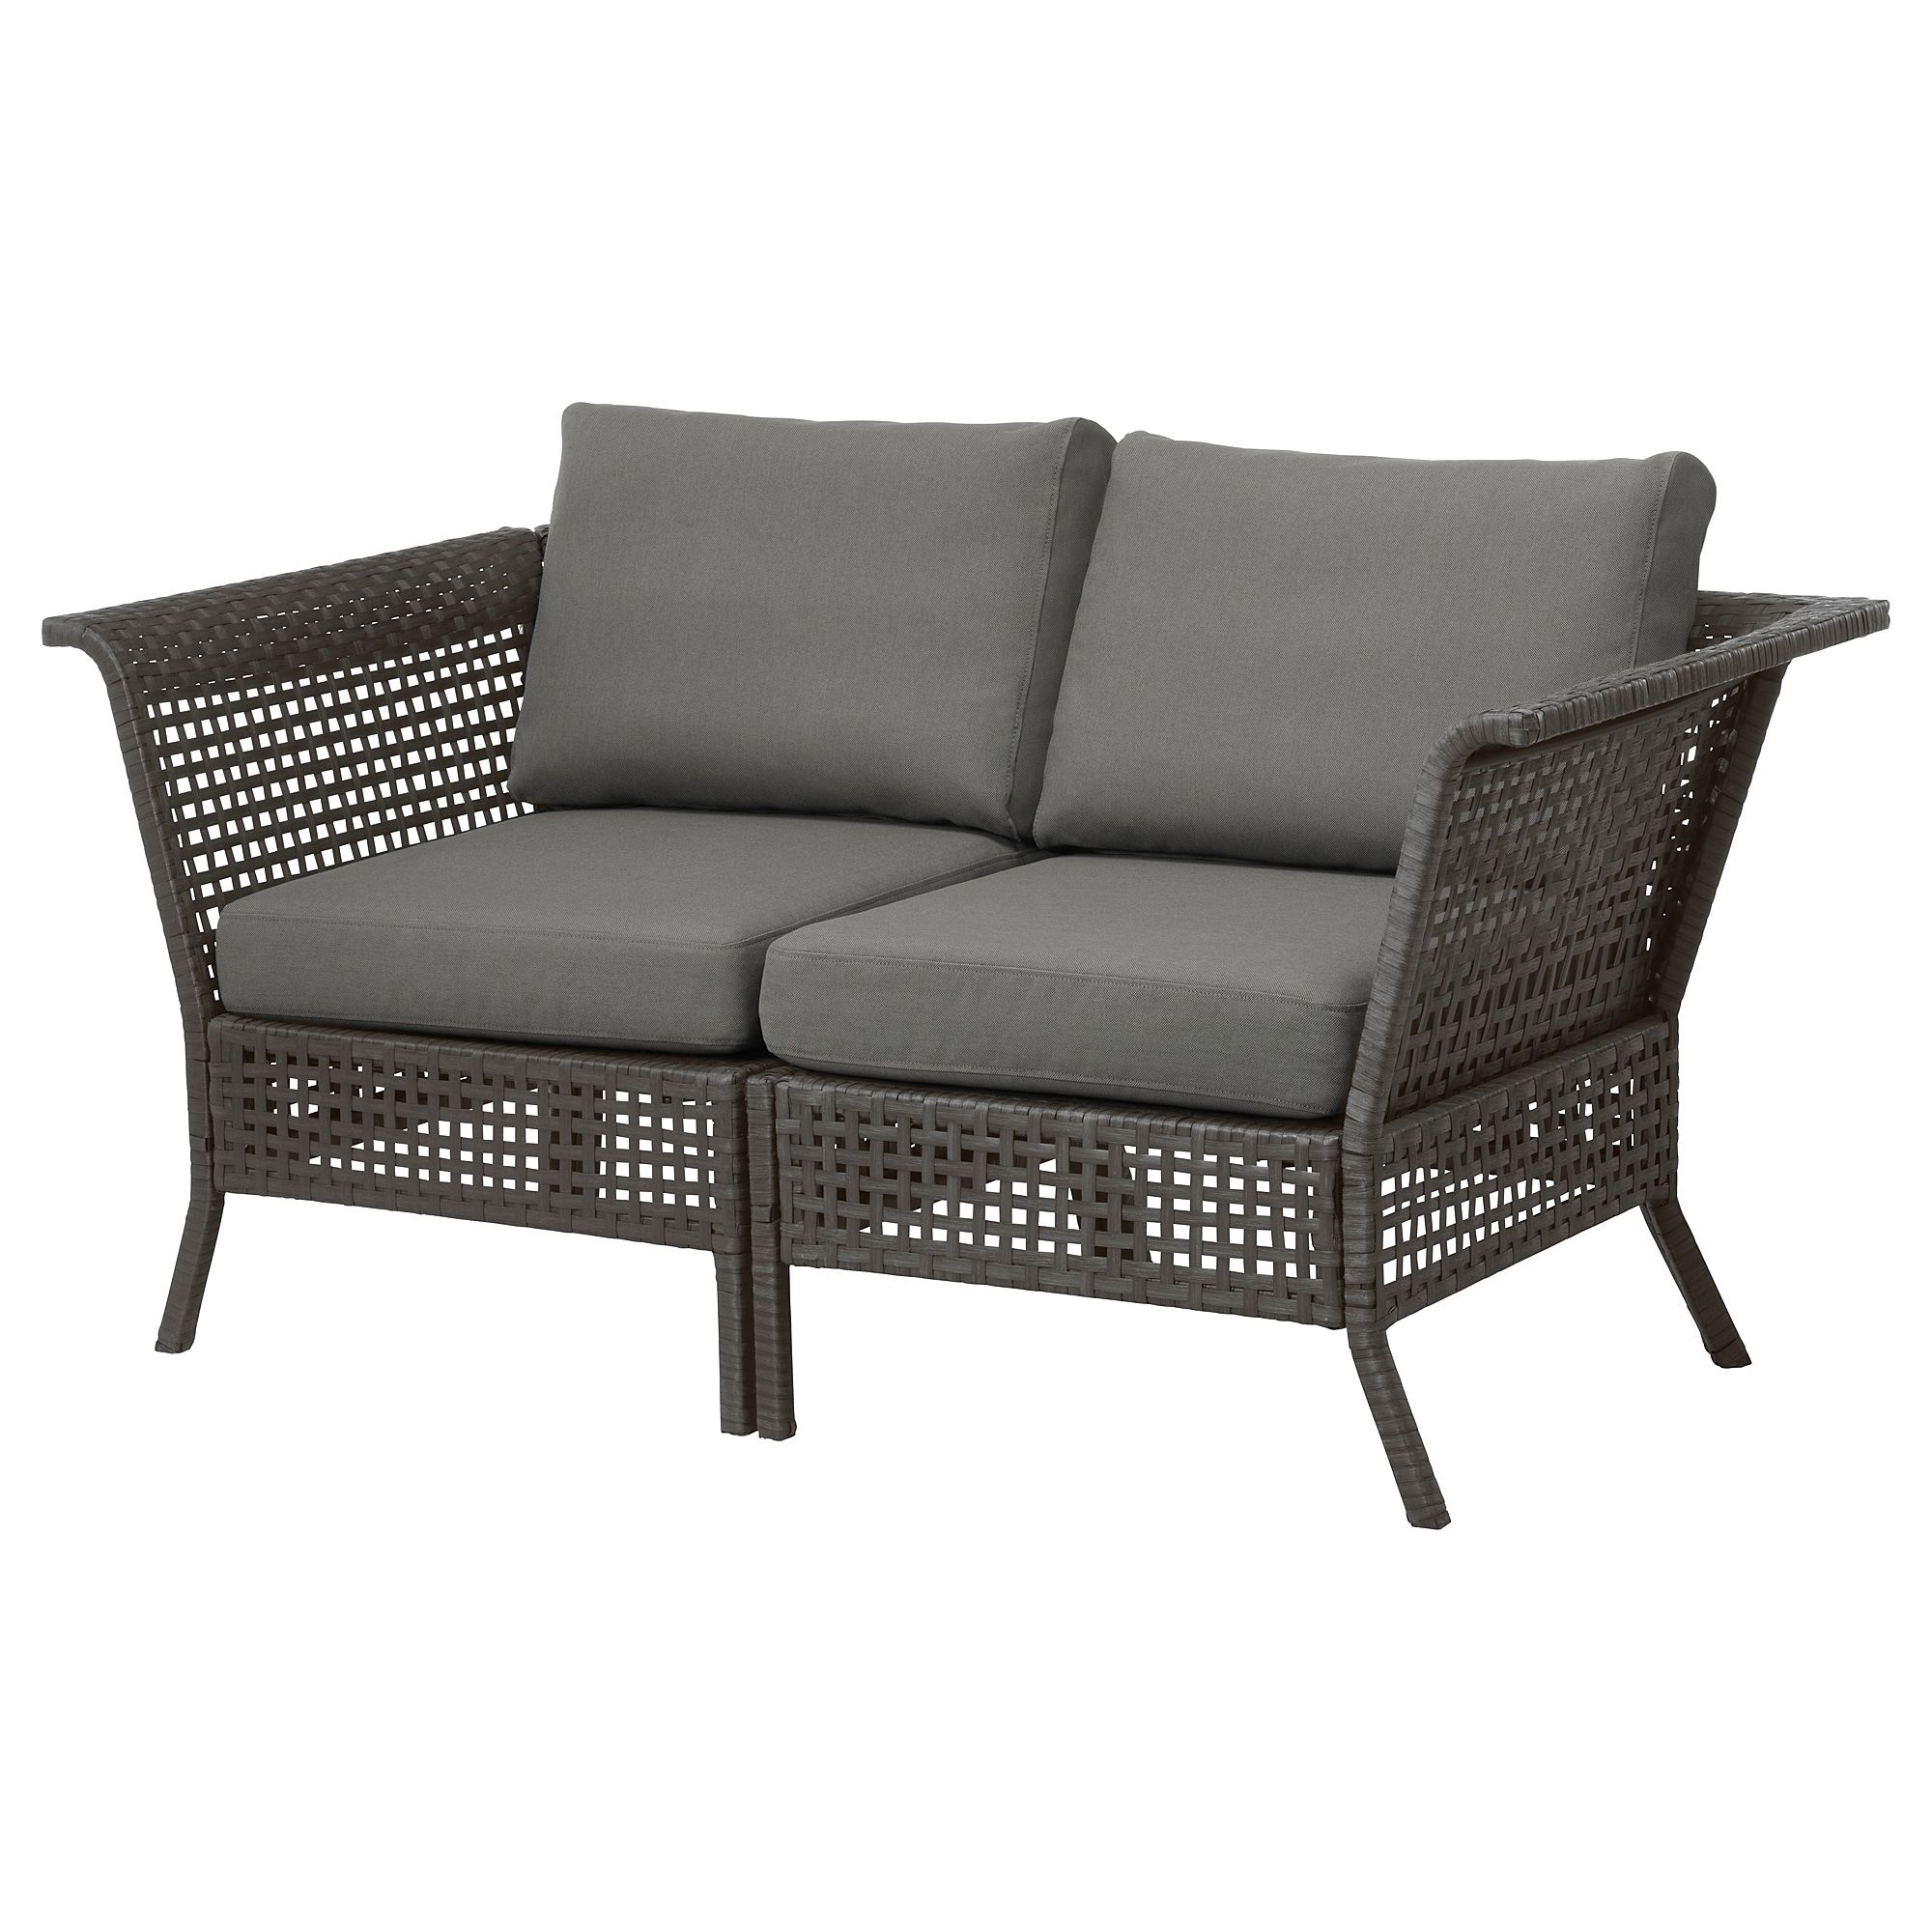 Garten Lounge sofa Best Of Us Furniture and Home Furnishings